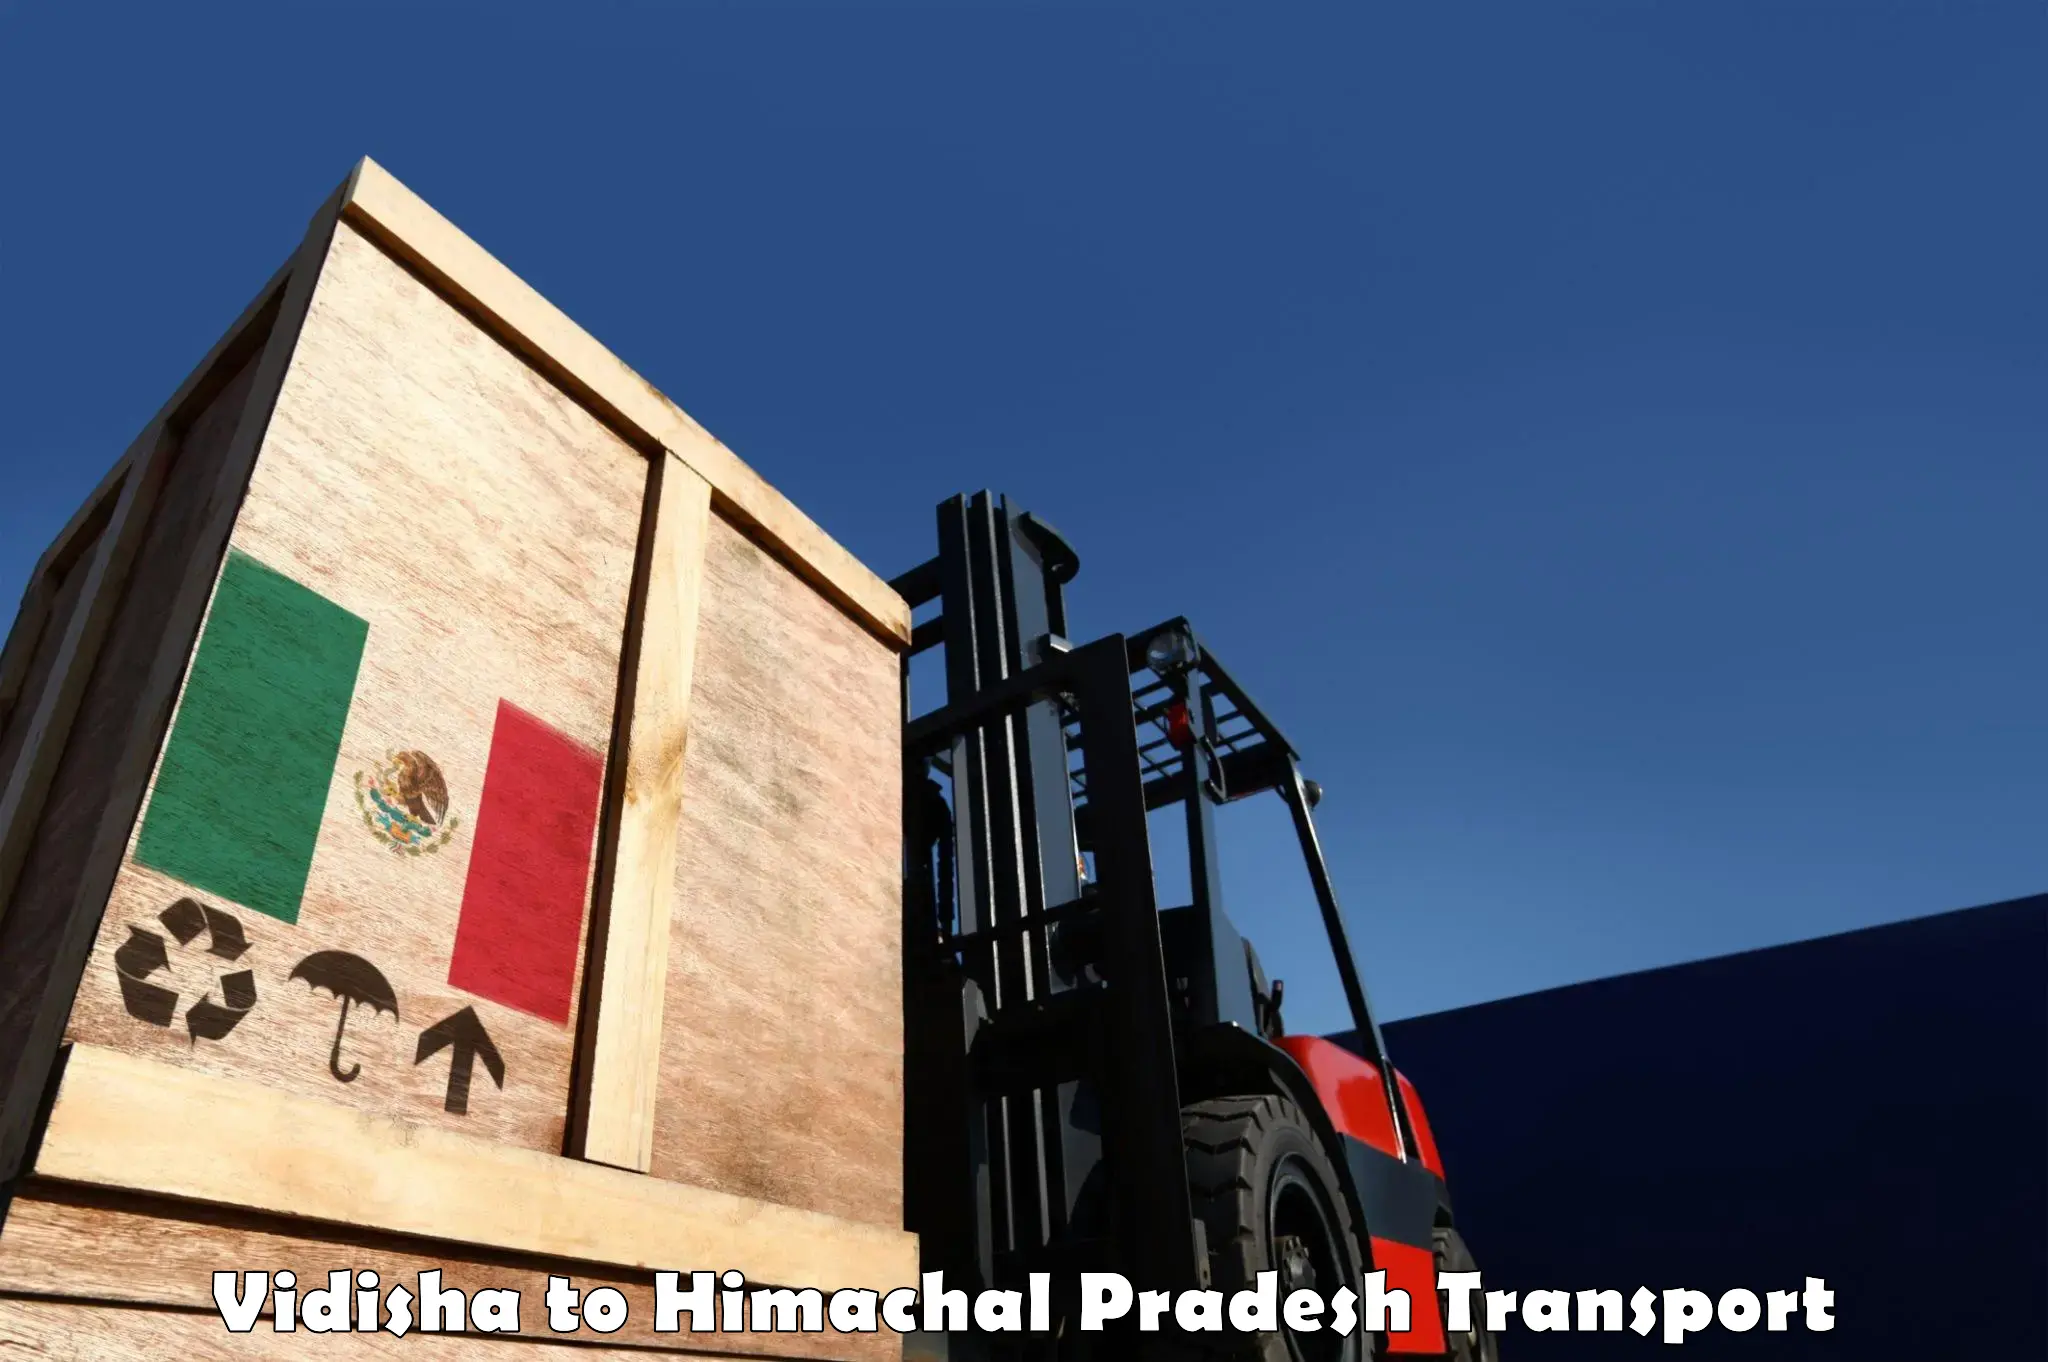 Truck transport companies in India Vidisha to Kullu